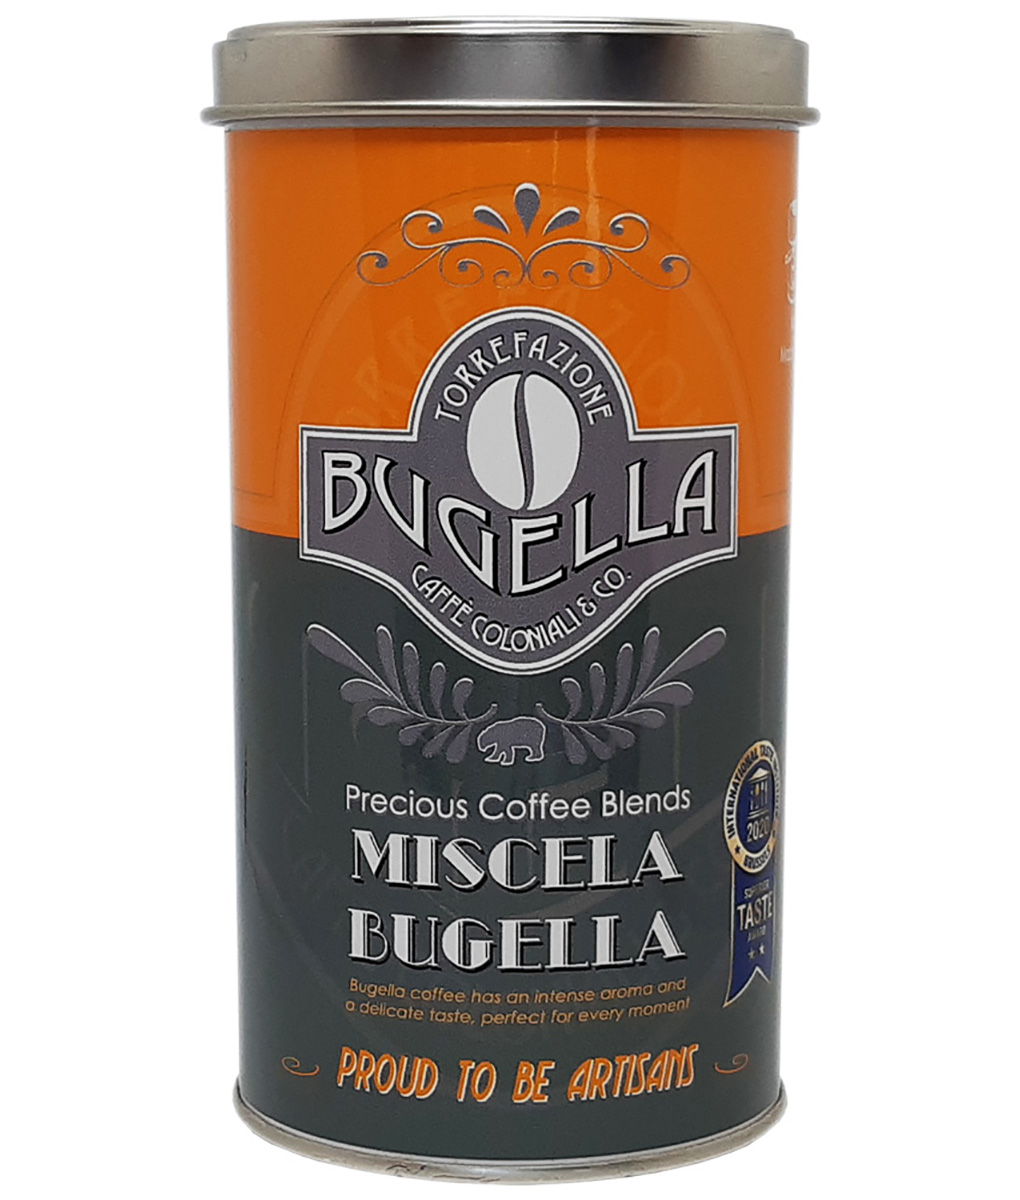 Miscela Bugella Precious Coffee Blends